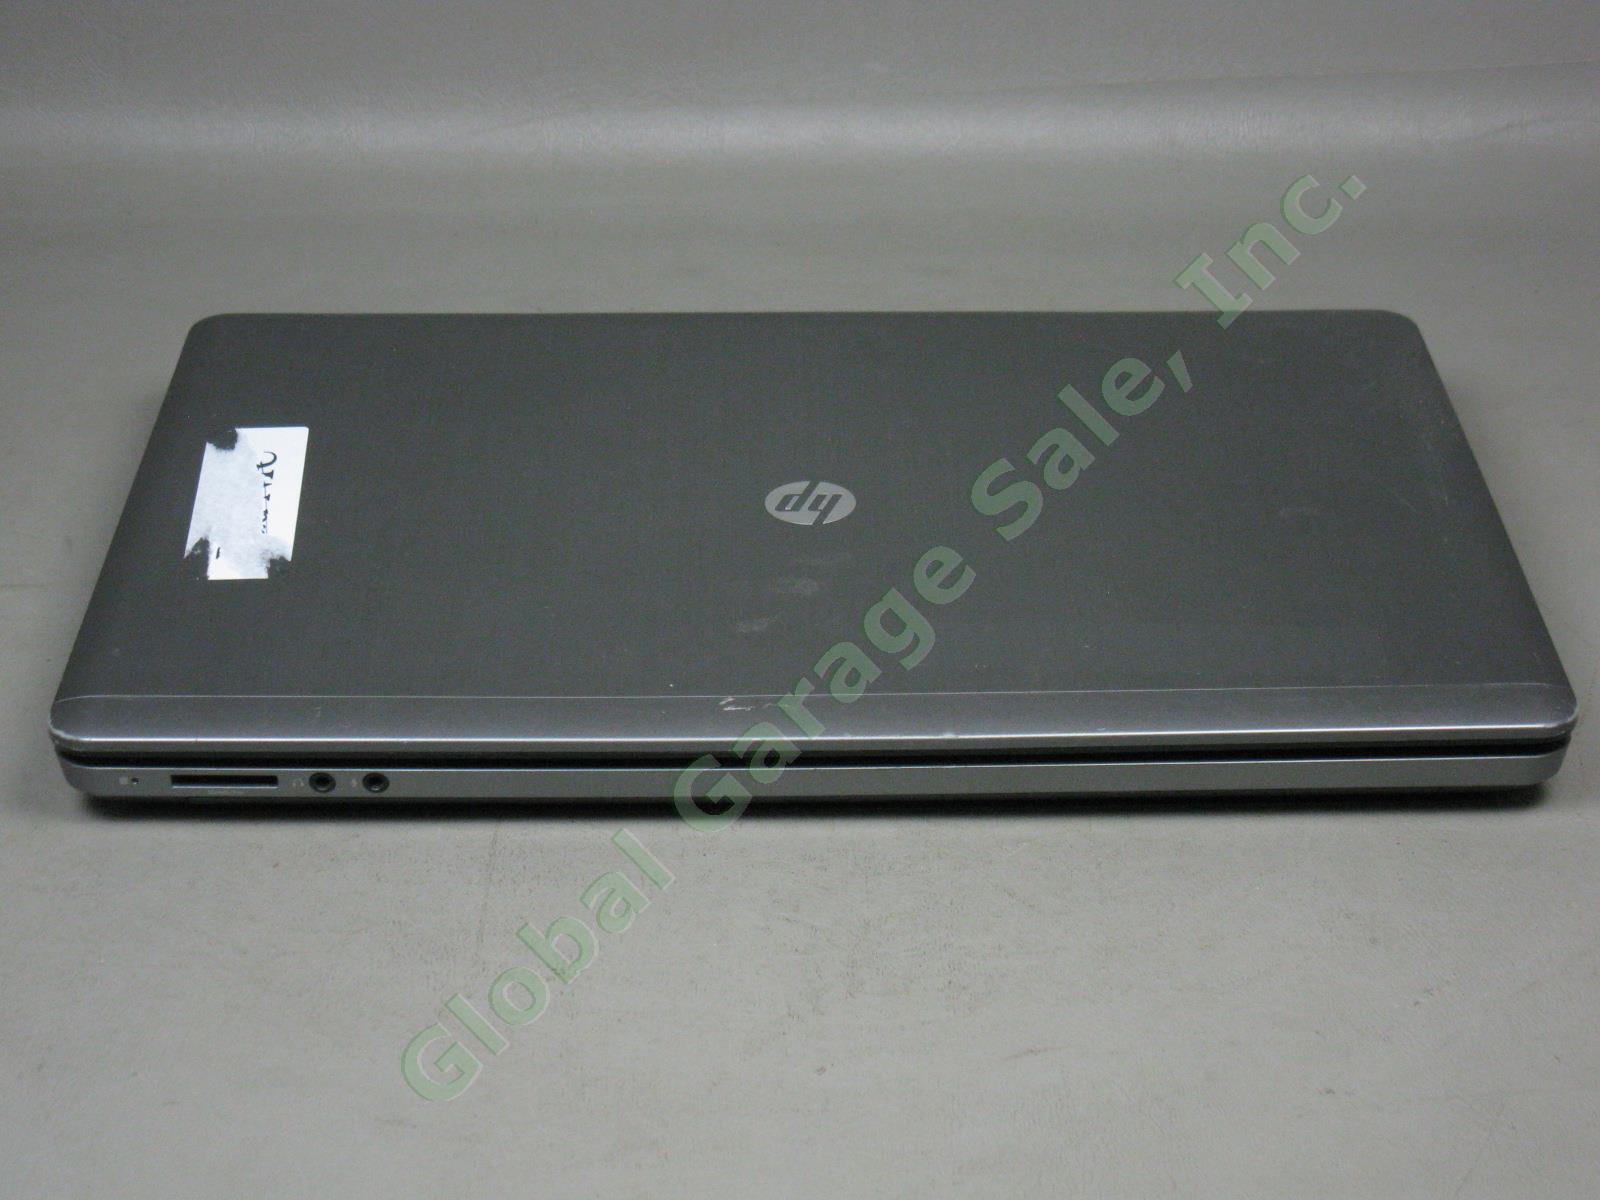 HP ProBook 4540s Laptop Computer Intel i5 2.60GHz 300GB HDD 4GB RAM Win 10 Pro 3